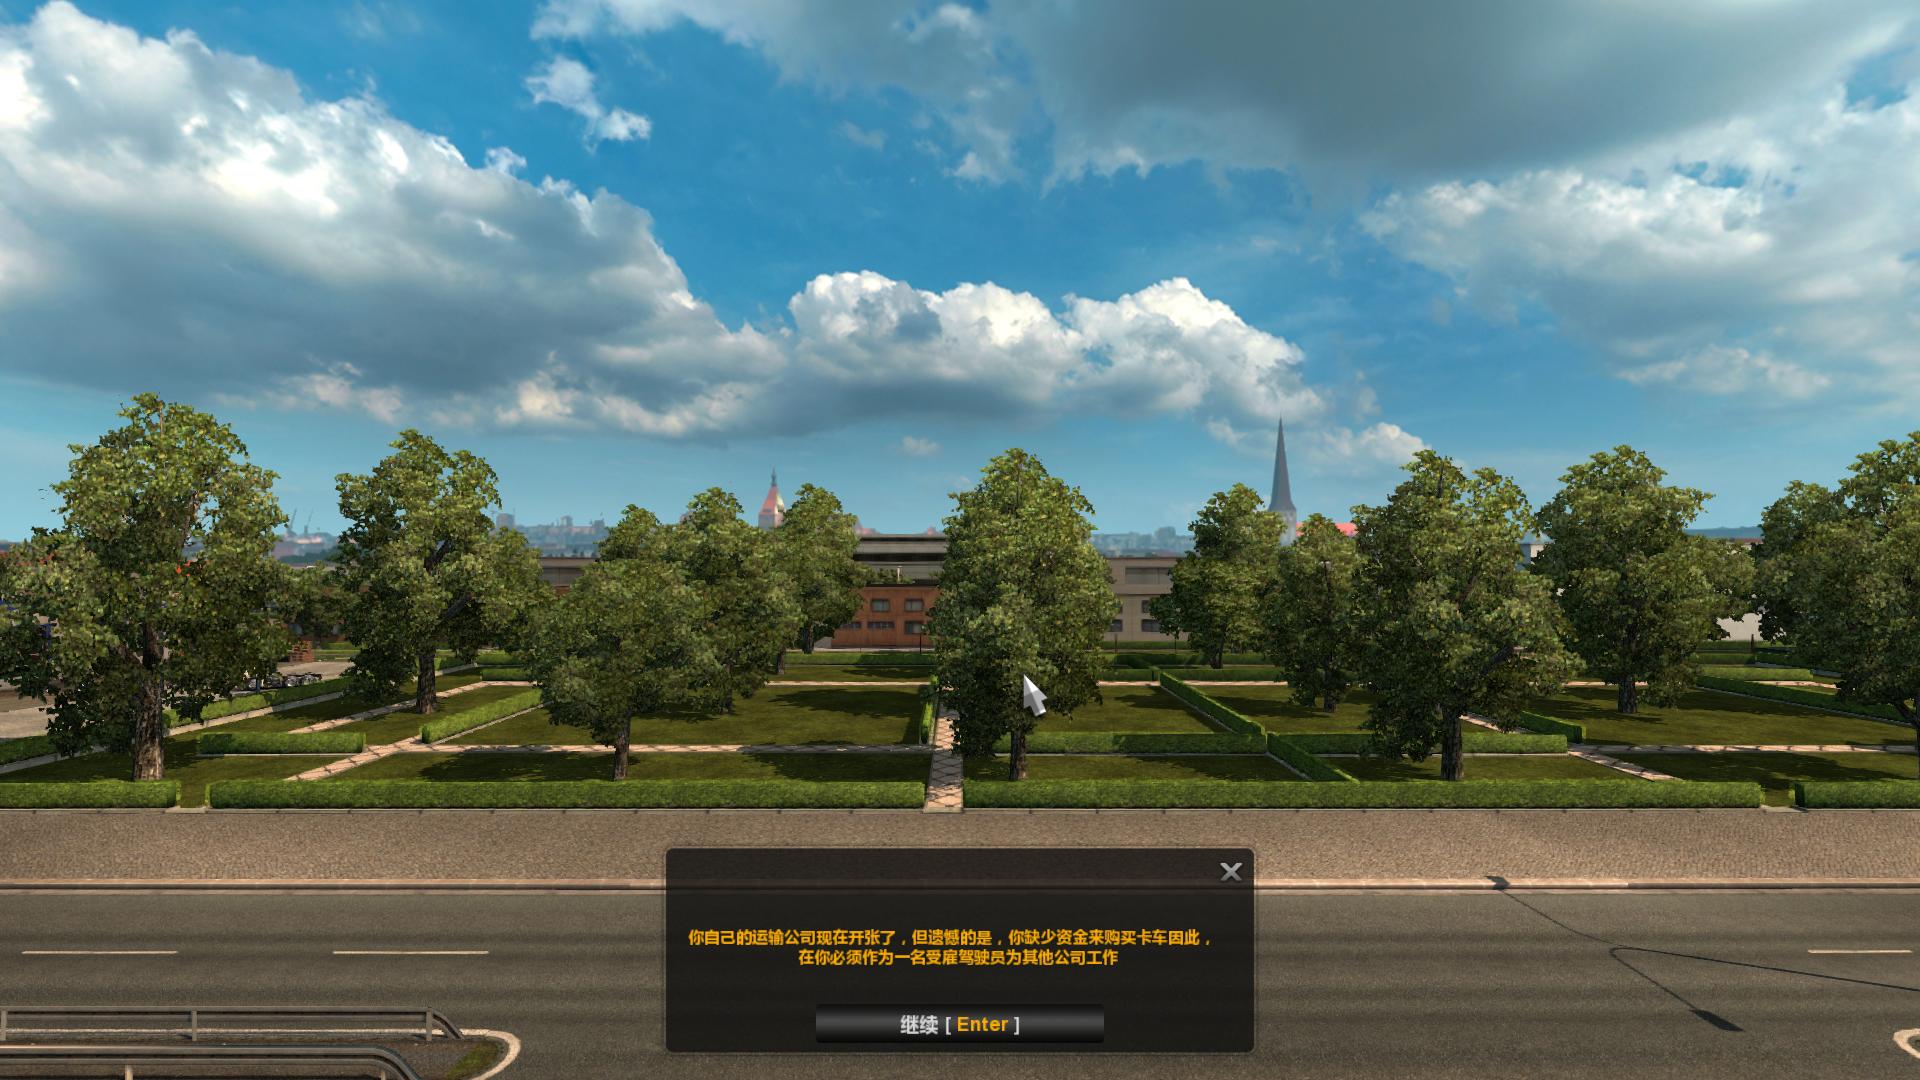 ŷ޿ģ2Euro Truck Simulator 2v1.15.1s޸HOG